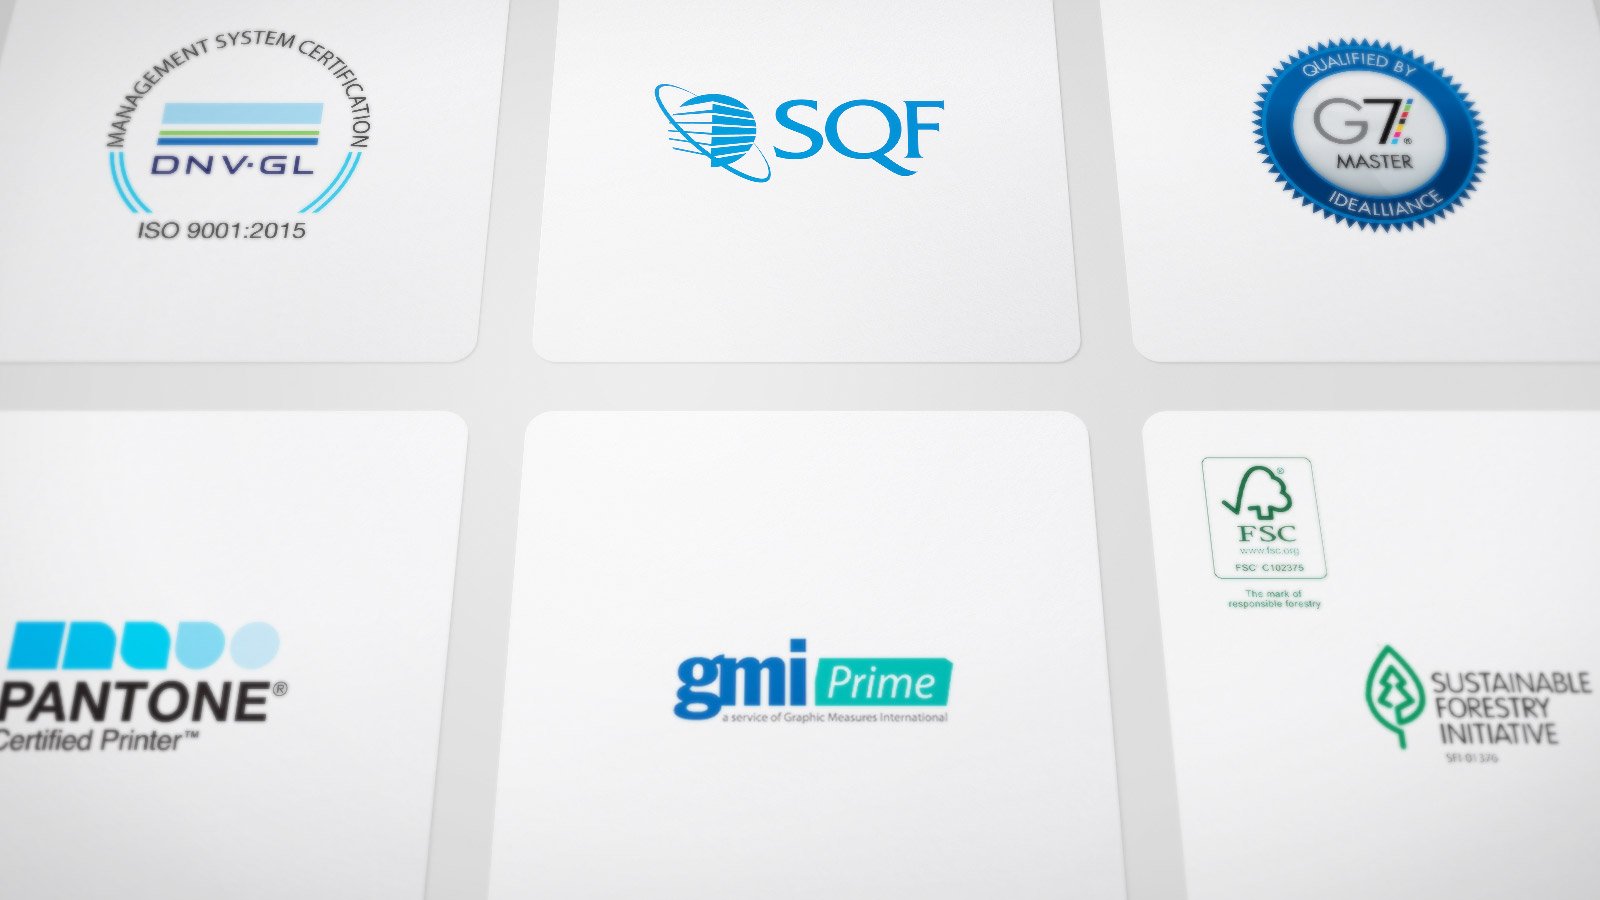 ISO, SQF, G7 Master, Pantone, GMI and Sustainability logos